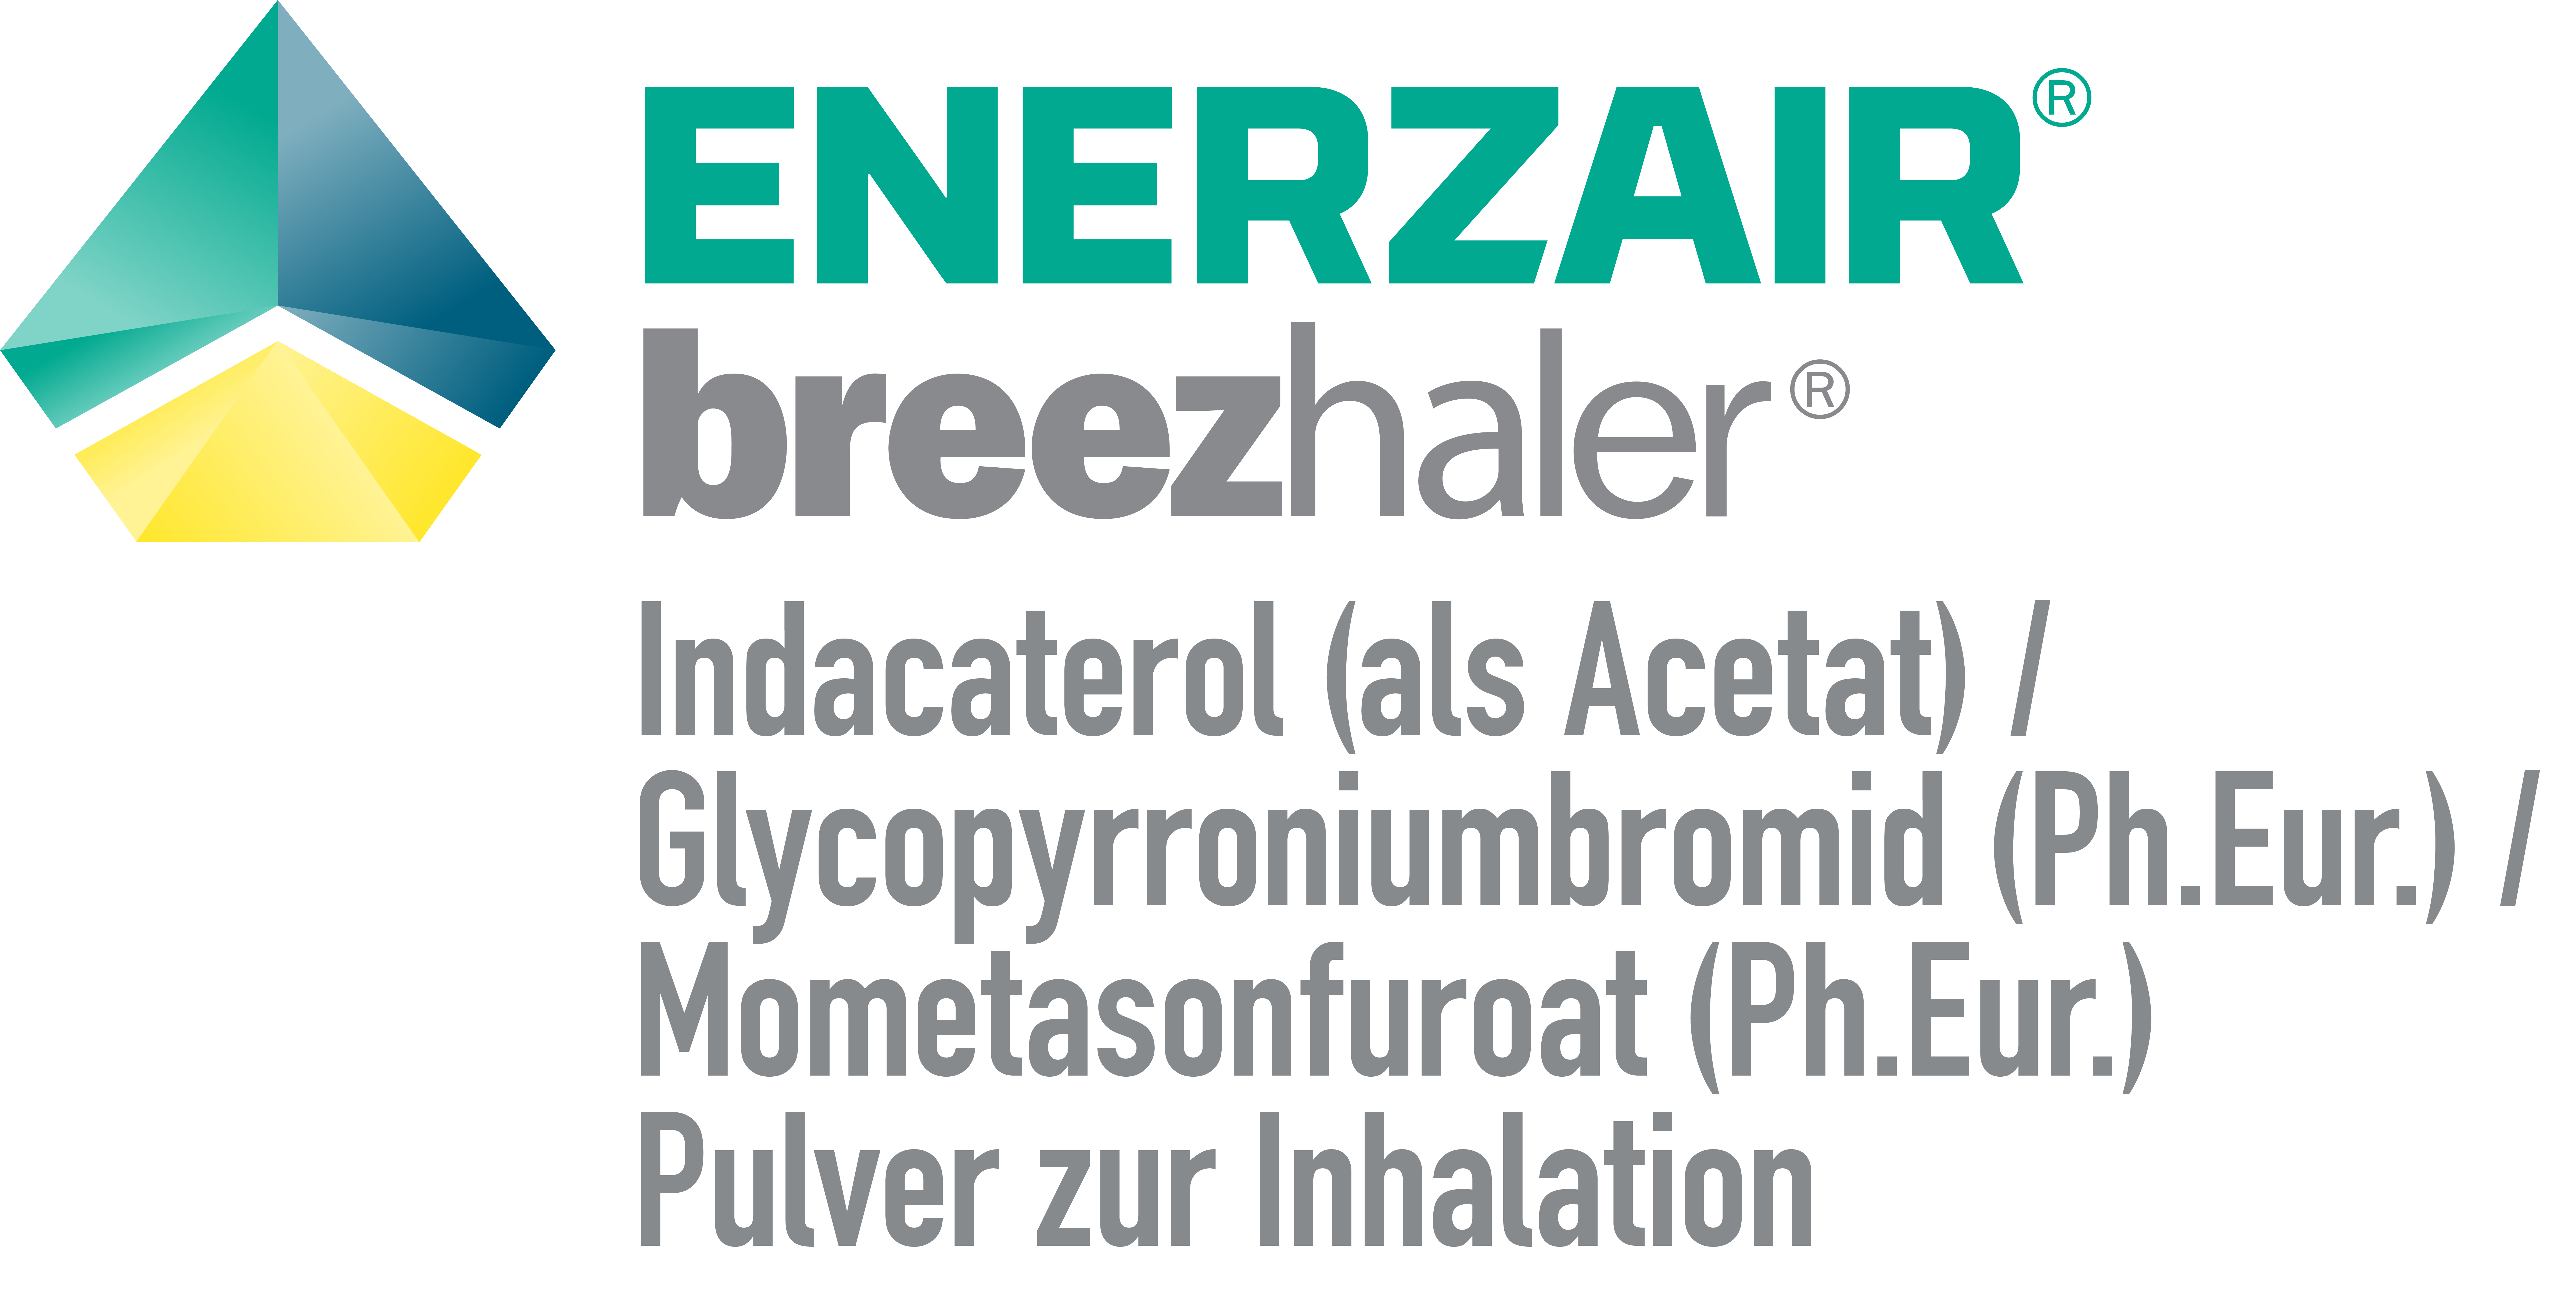 Breezhaler Enerzair Logo German